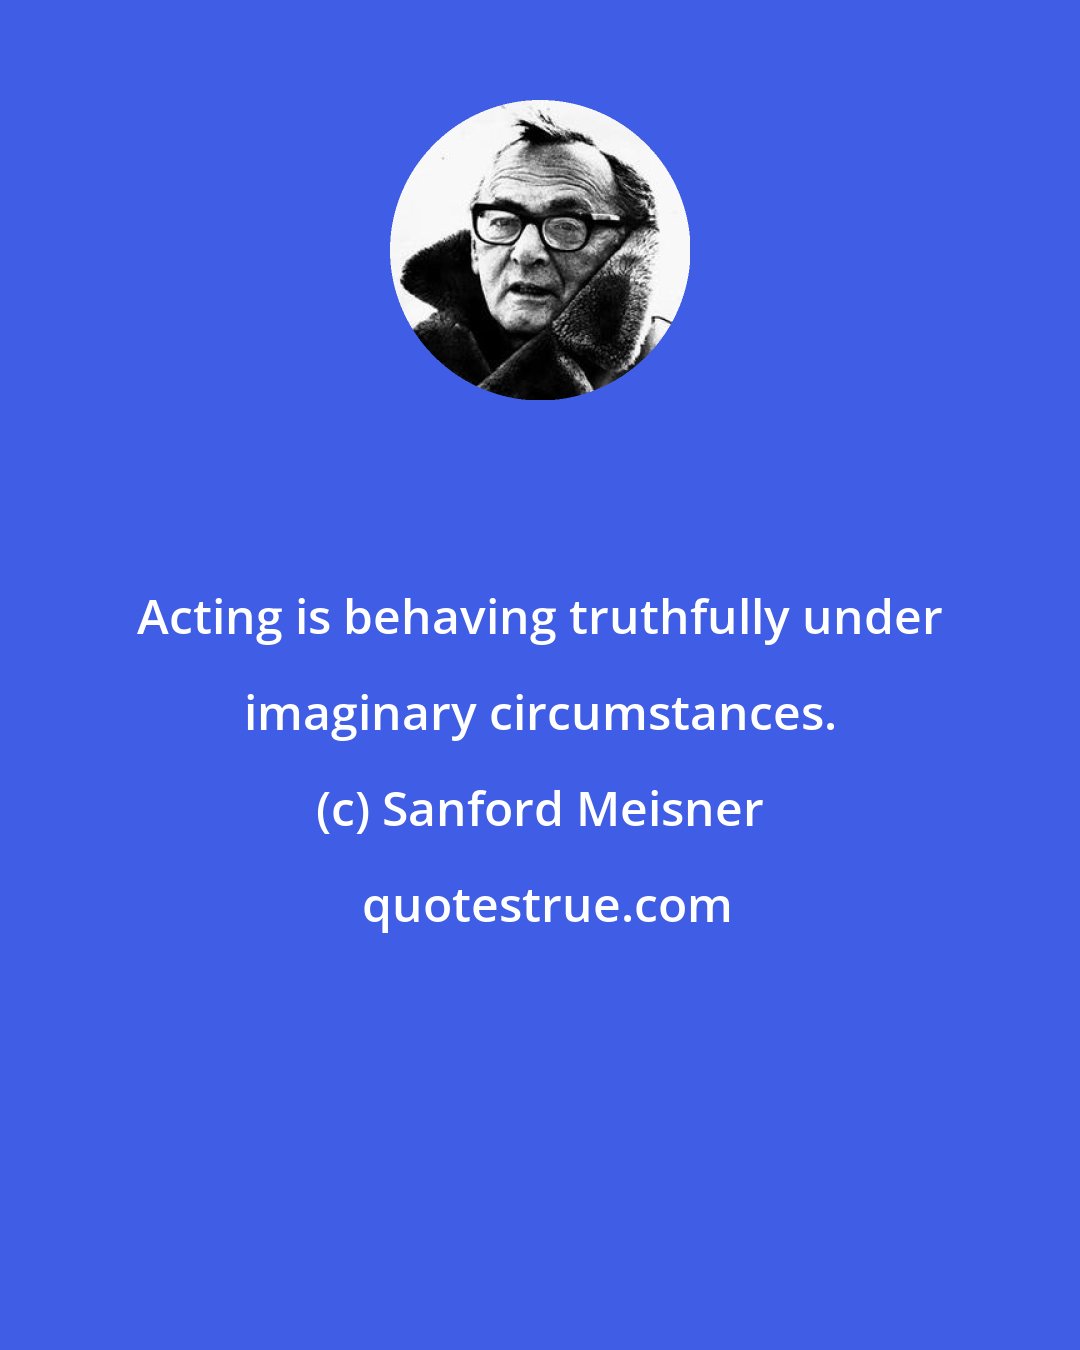 Sanford Meisner: Acting is behaving truthfully under imaginary circumstances.